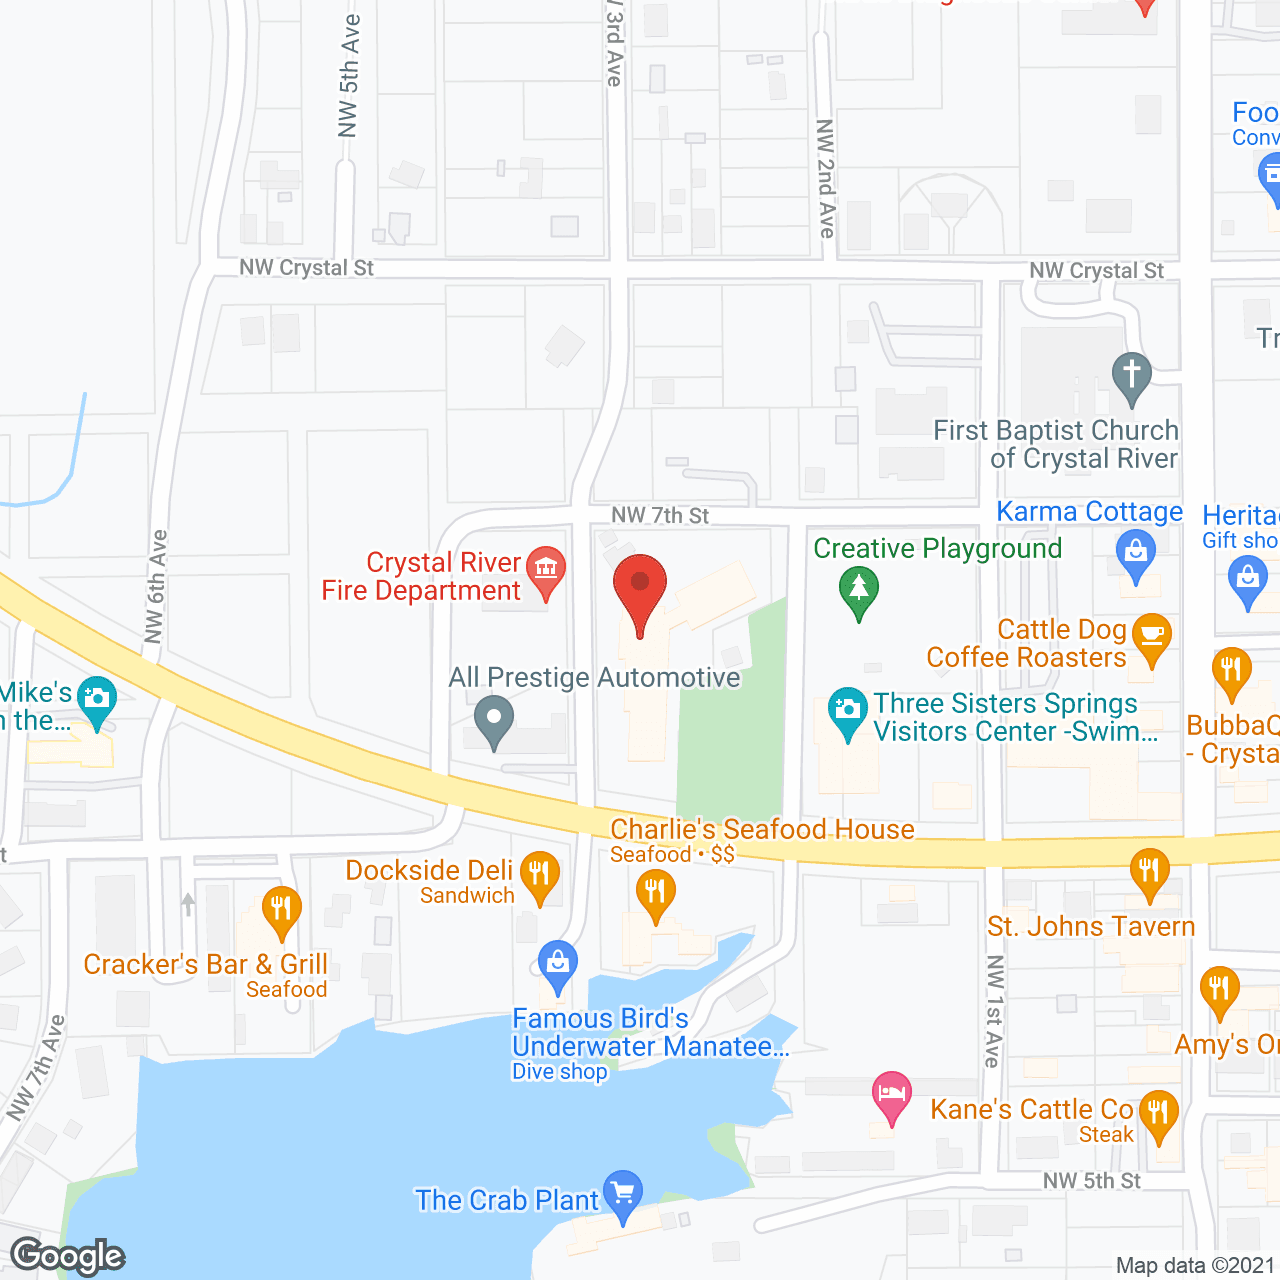 Cedar Creek Assisted Living in google map